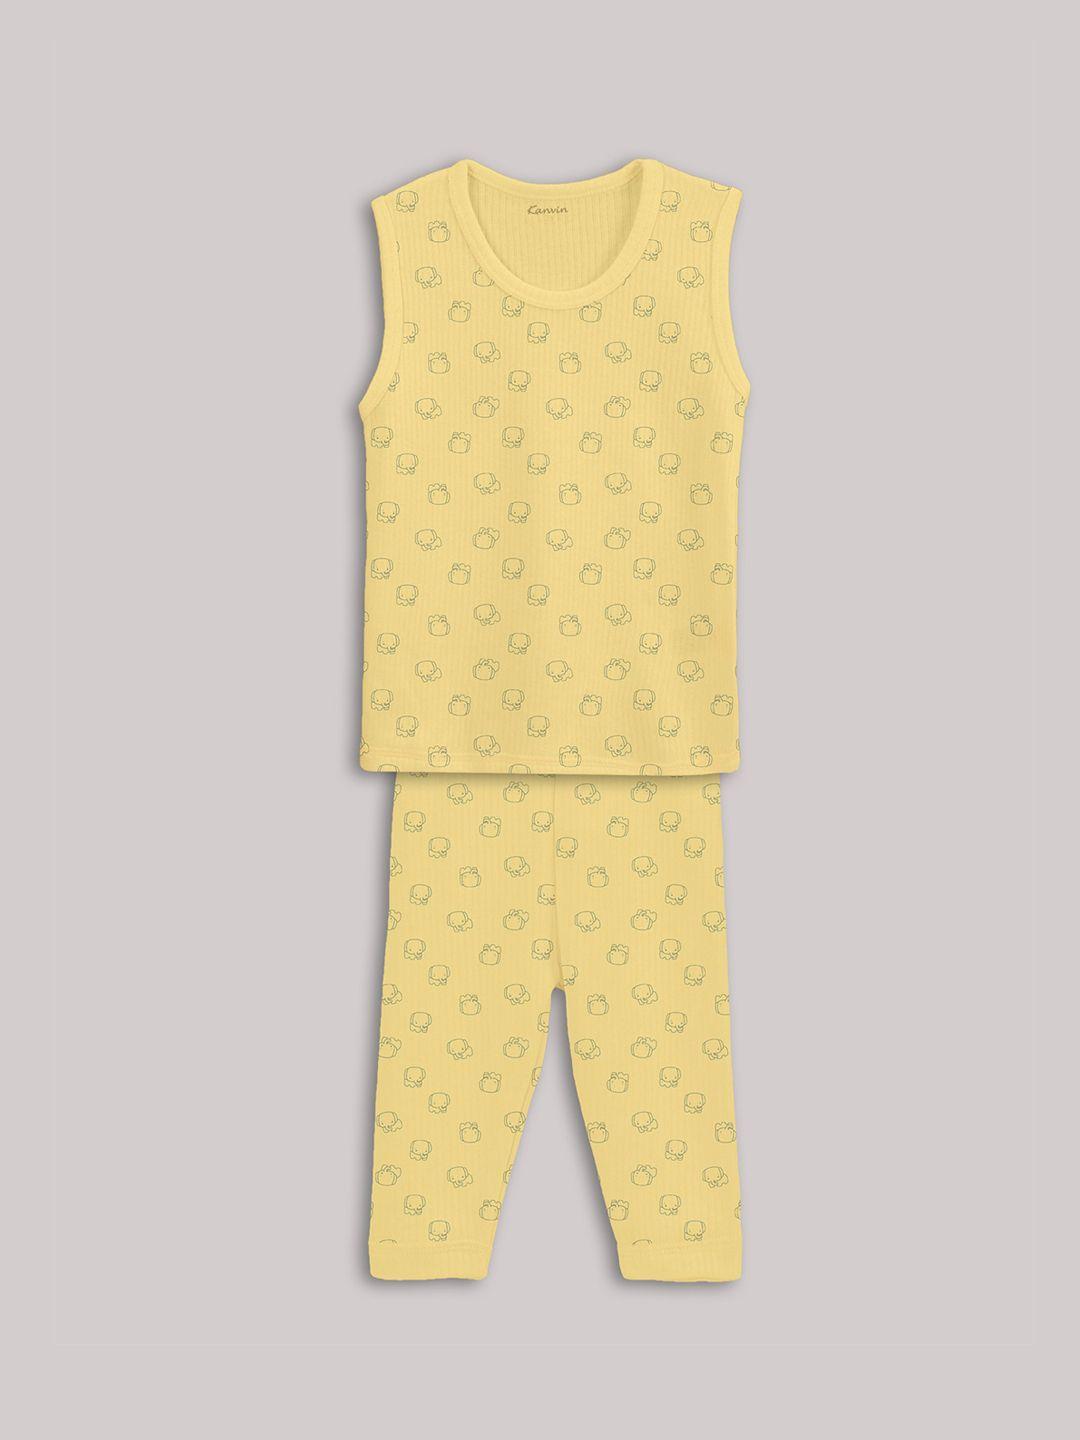 kanvin yellow boys printed sleeveless thermal set